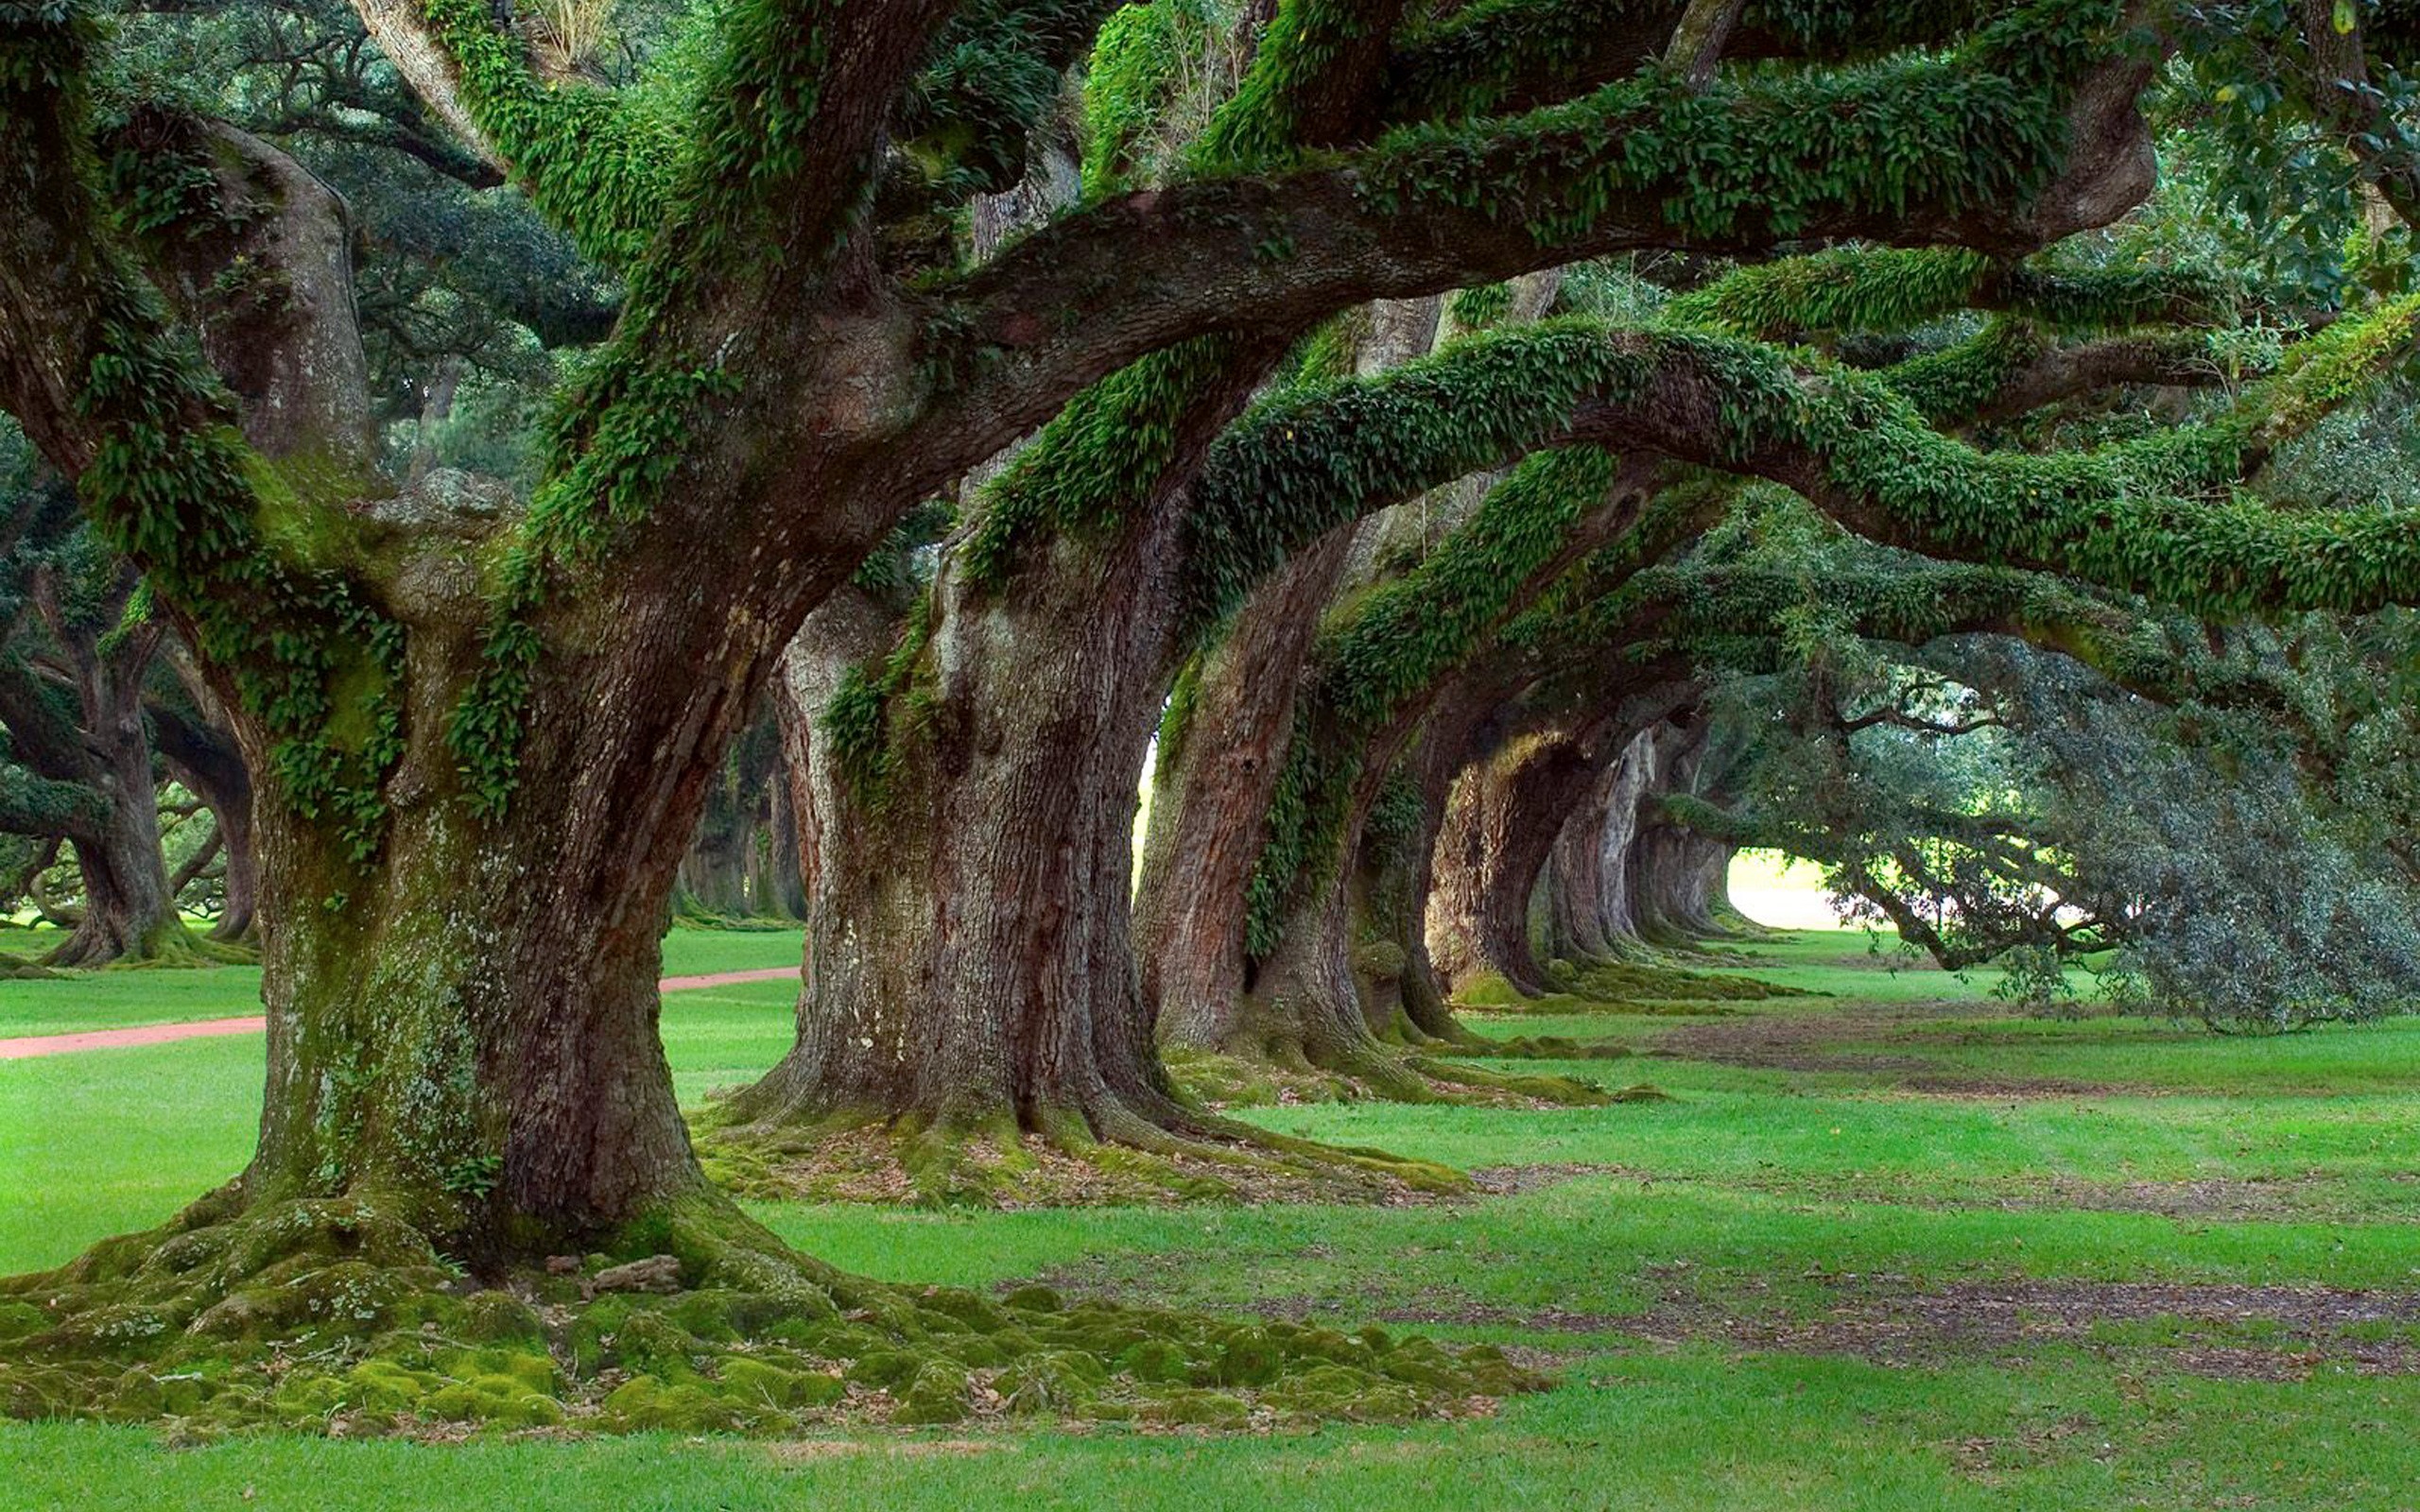 General 2560x1600 trees plants outdoors grass oak trees